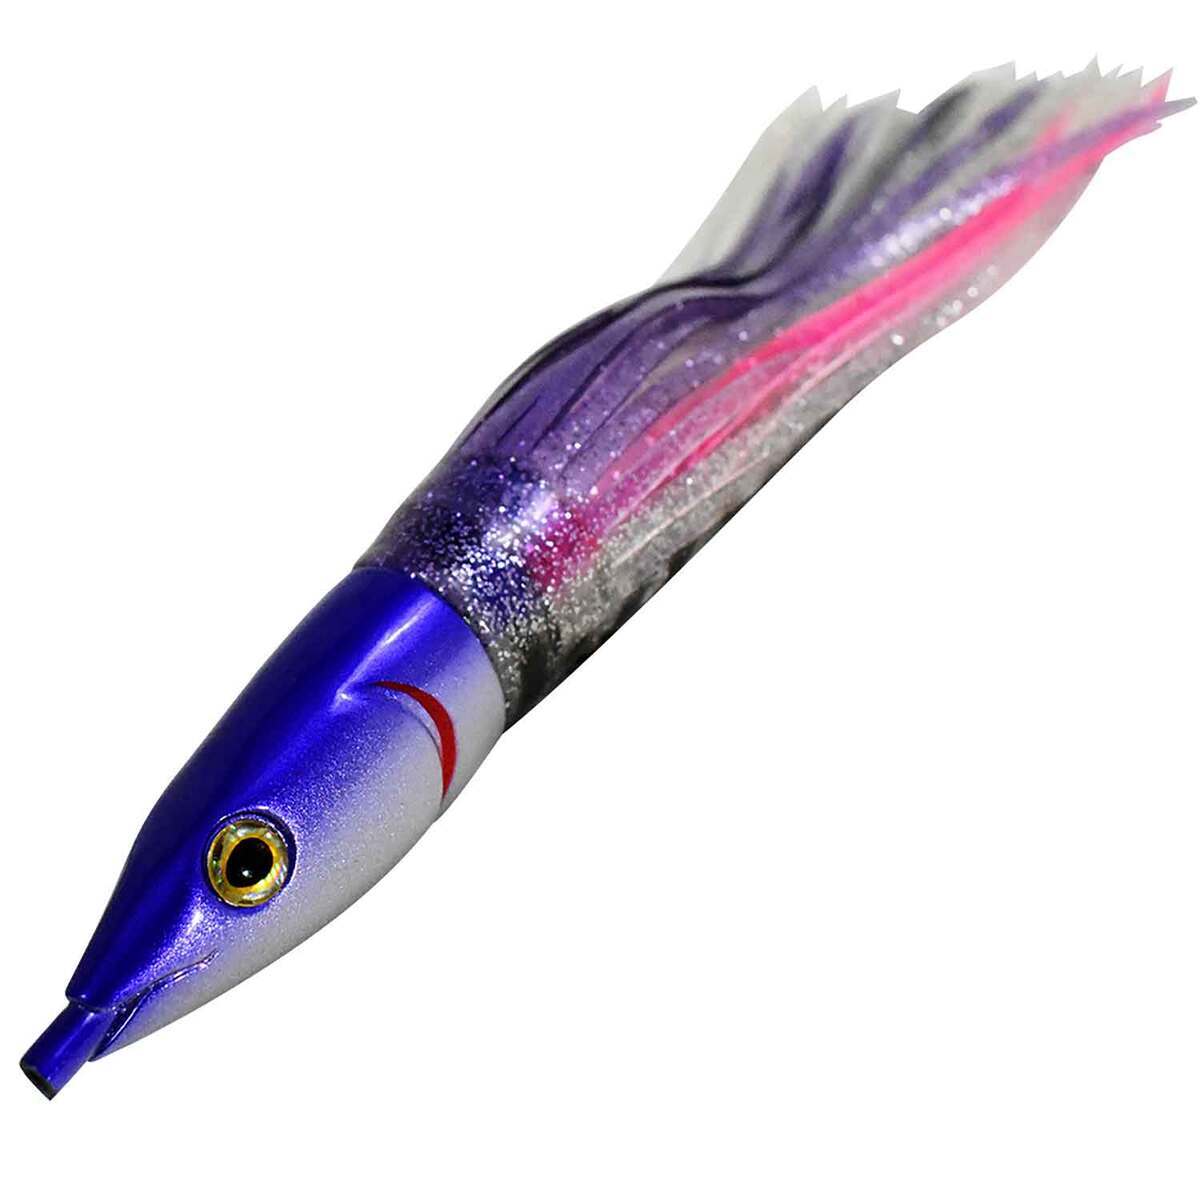 https://www.sportsmans.com/medias/magbay-lures-phoenix-fish-head-saltwater-trolling-lure-purple-haze-10in-1780435-1.jpg?context=bWFzdGVyfGltYWdlc3w1NDEyNnxpbWFnZS9qcGVnfGFETTVMMmd6T1M4eE1Ea3dNREl4TXpJd01qazNOQzh4Tnpnd05ETTFMVEZmWW1GelpTMWpiMjUyWlhKemFXOXVSbTl5YldGMFh6RXlNREF0WTI5dWRtVnljMmx2YmtadmNtMWhkQXw3MTY2ZDJkZDgzMjhlOThiZGM2ZDI2NzNjODBmNTNjMTIzY2ExMWE4ZDg4NTllODI5NDNhZWVlNWU4MjcyOWY2